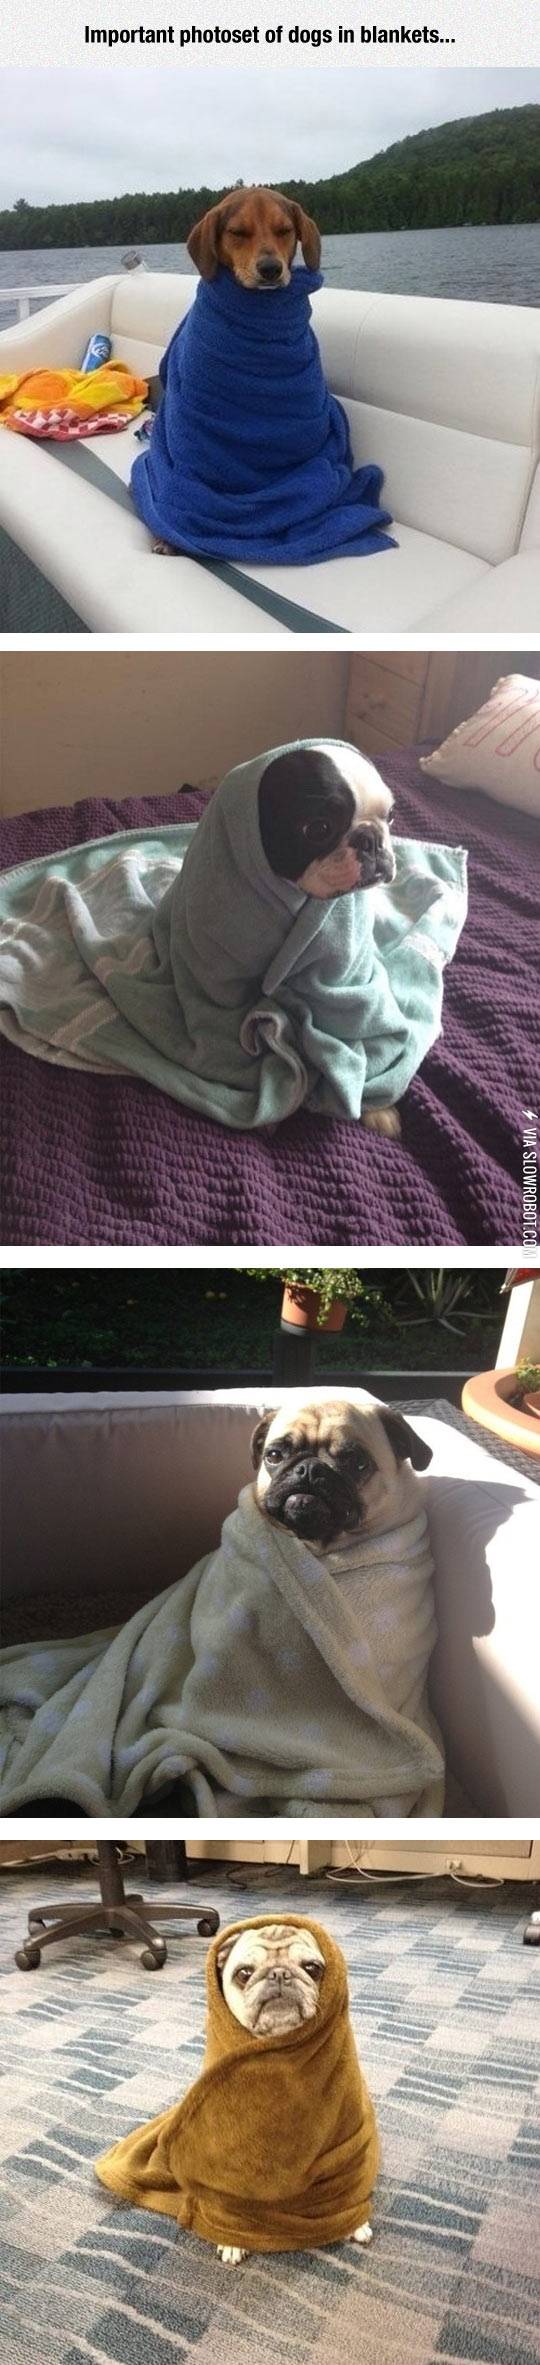 Dogs+in+blankets.